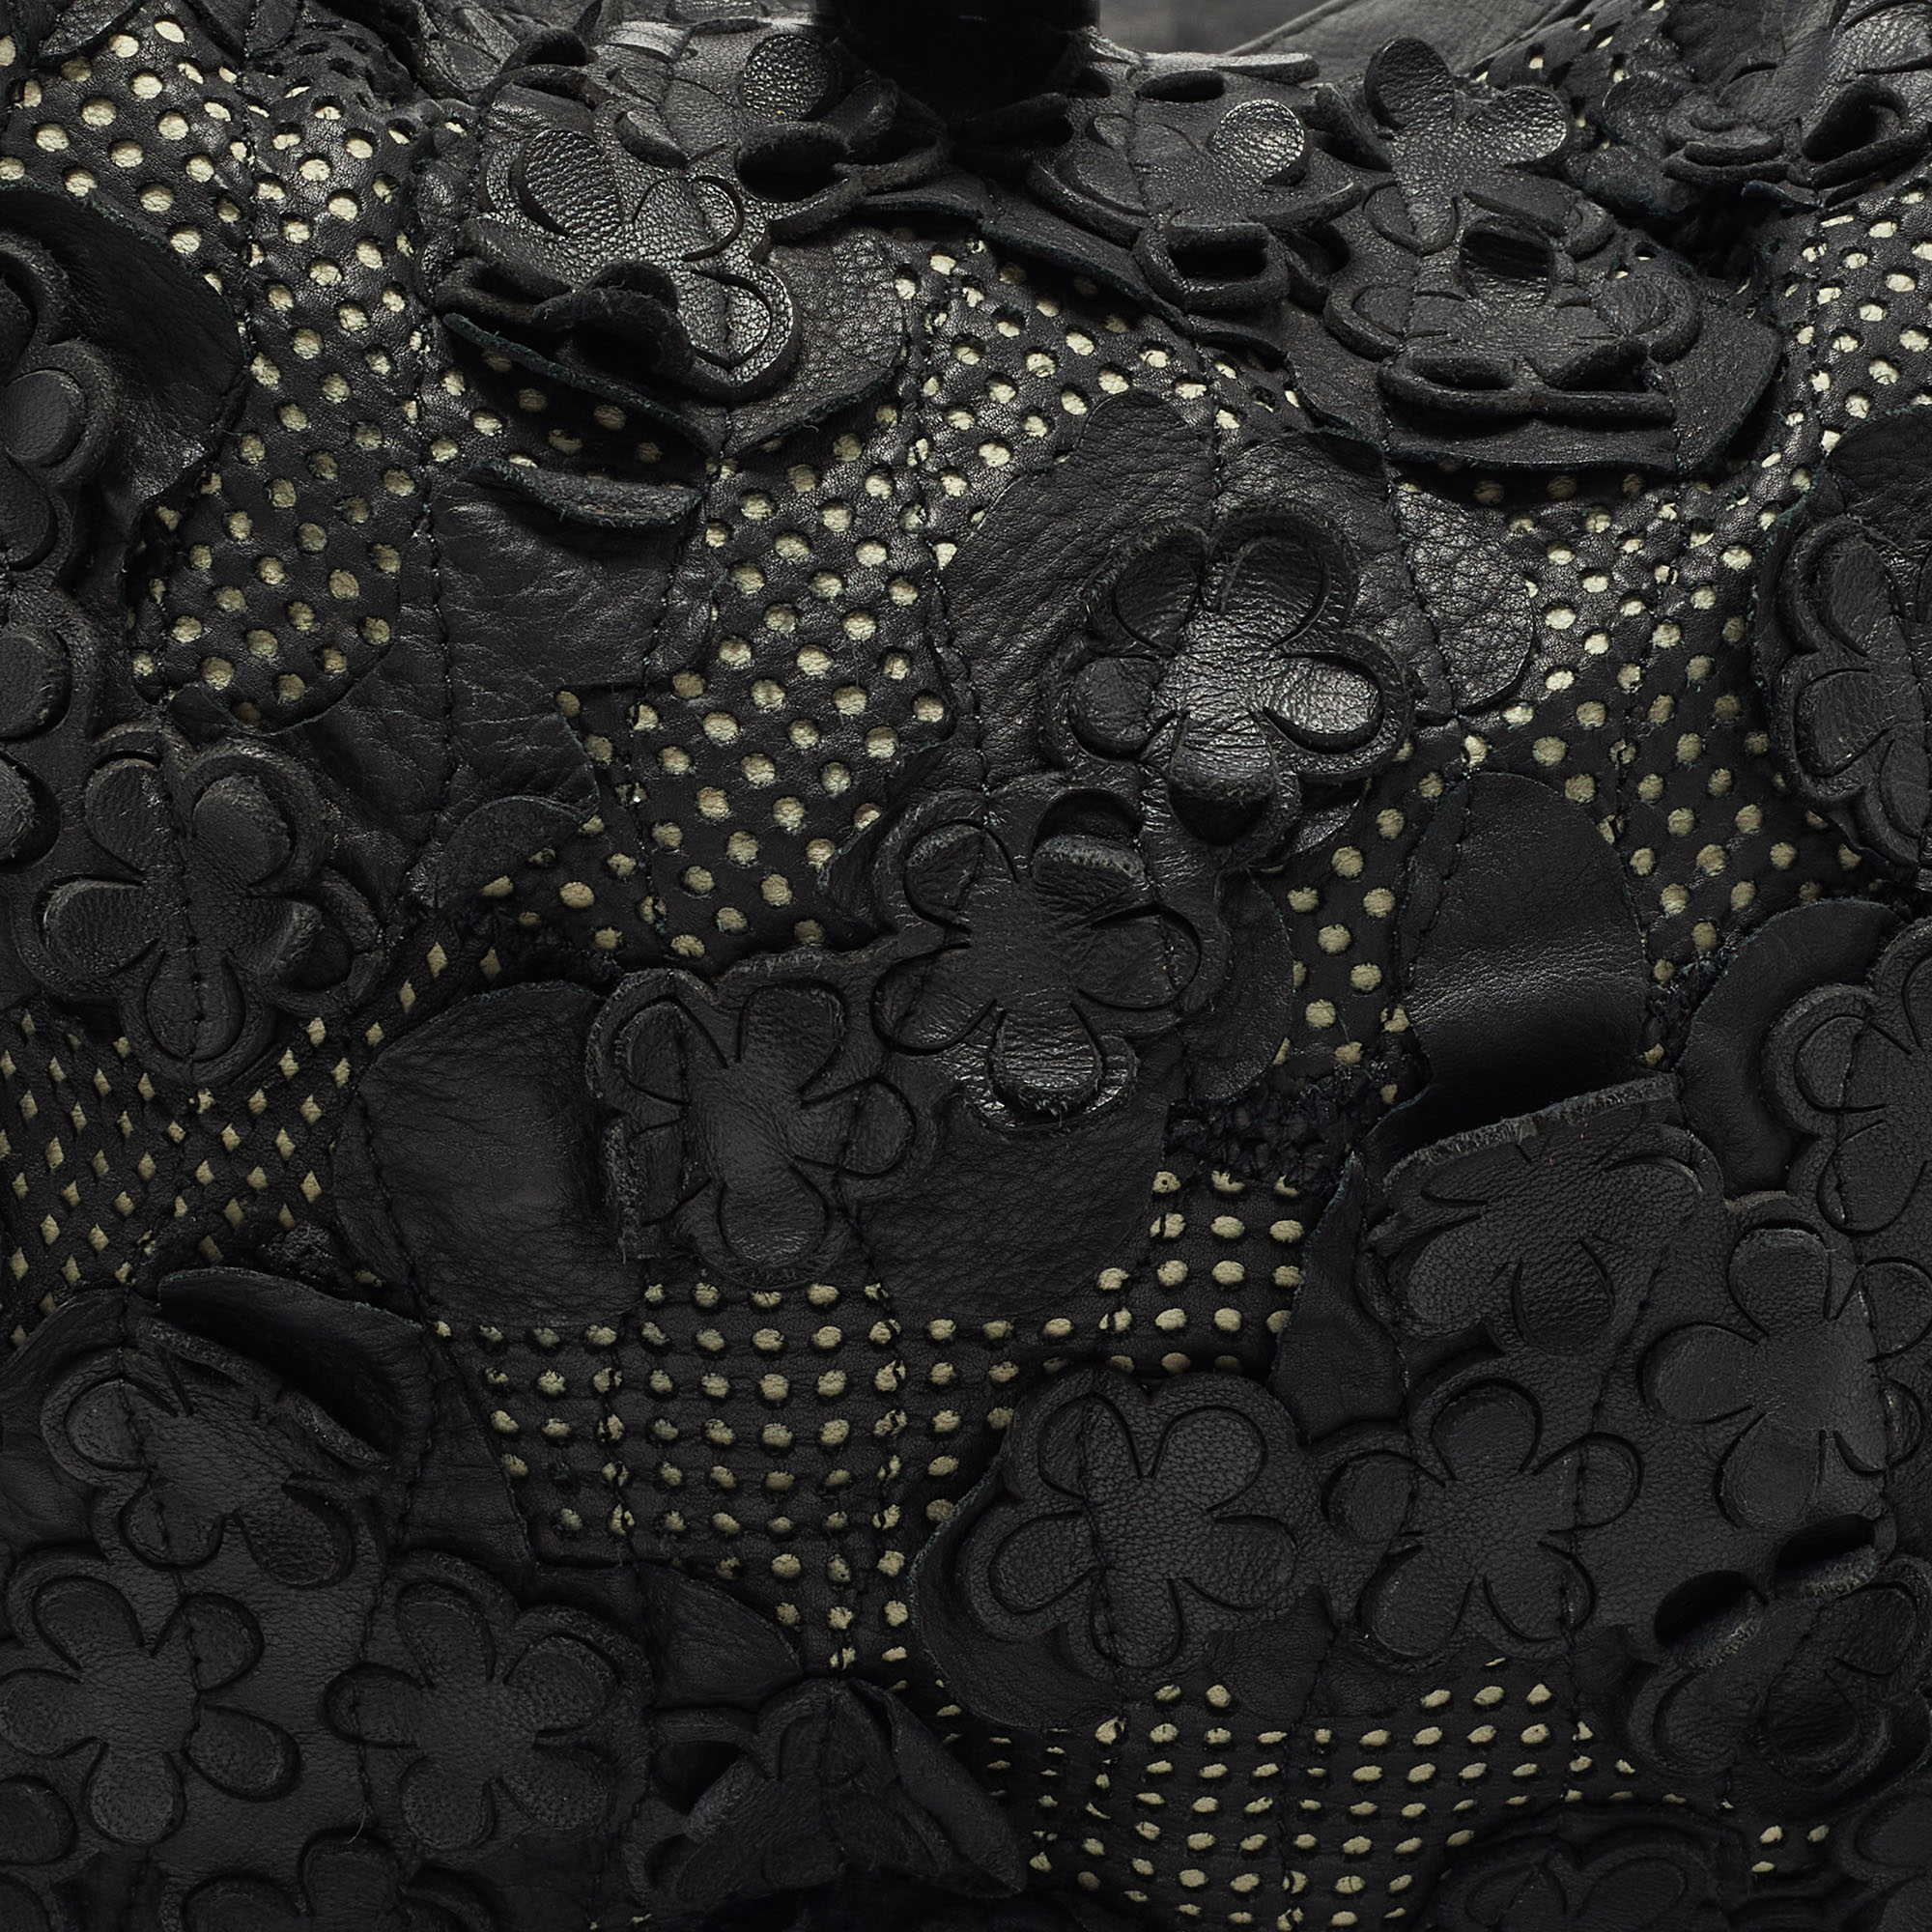 Bottega Veneta Black Lasercut Leather Floral Applique Hobo